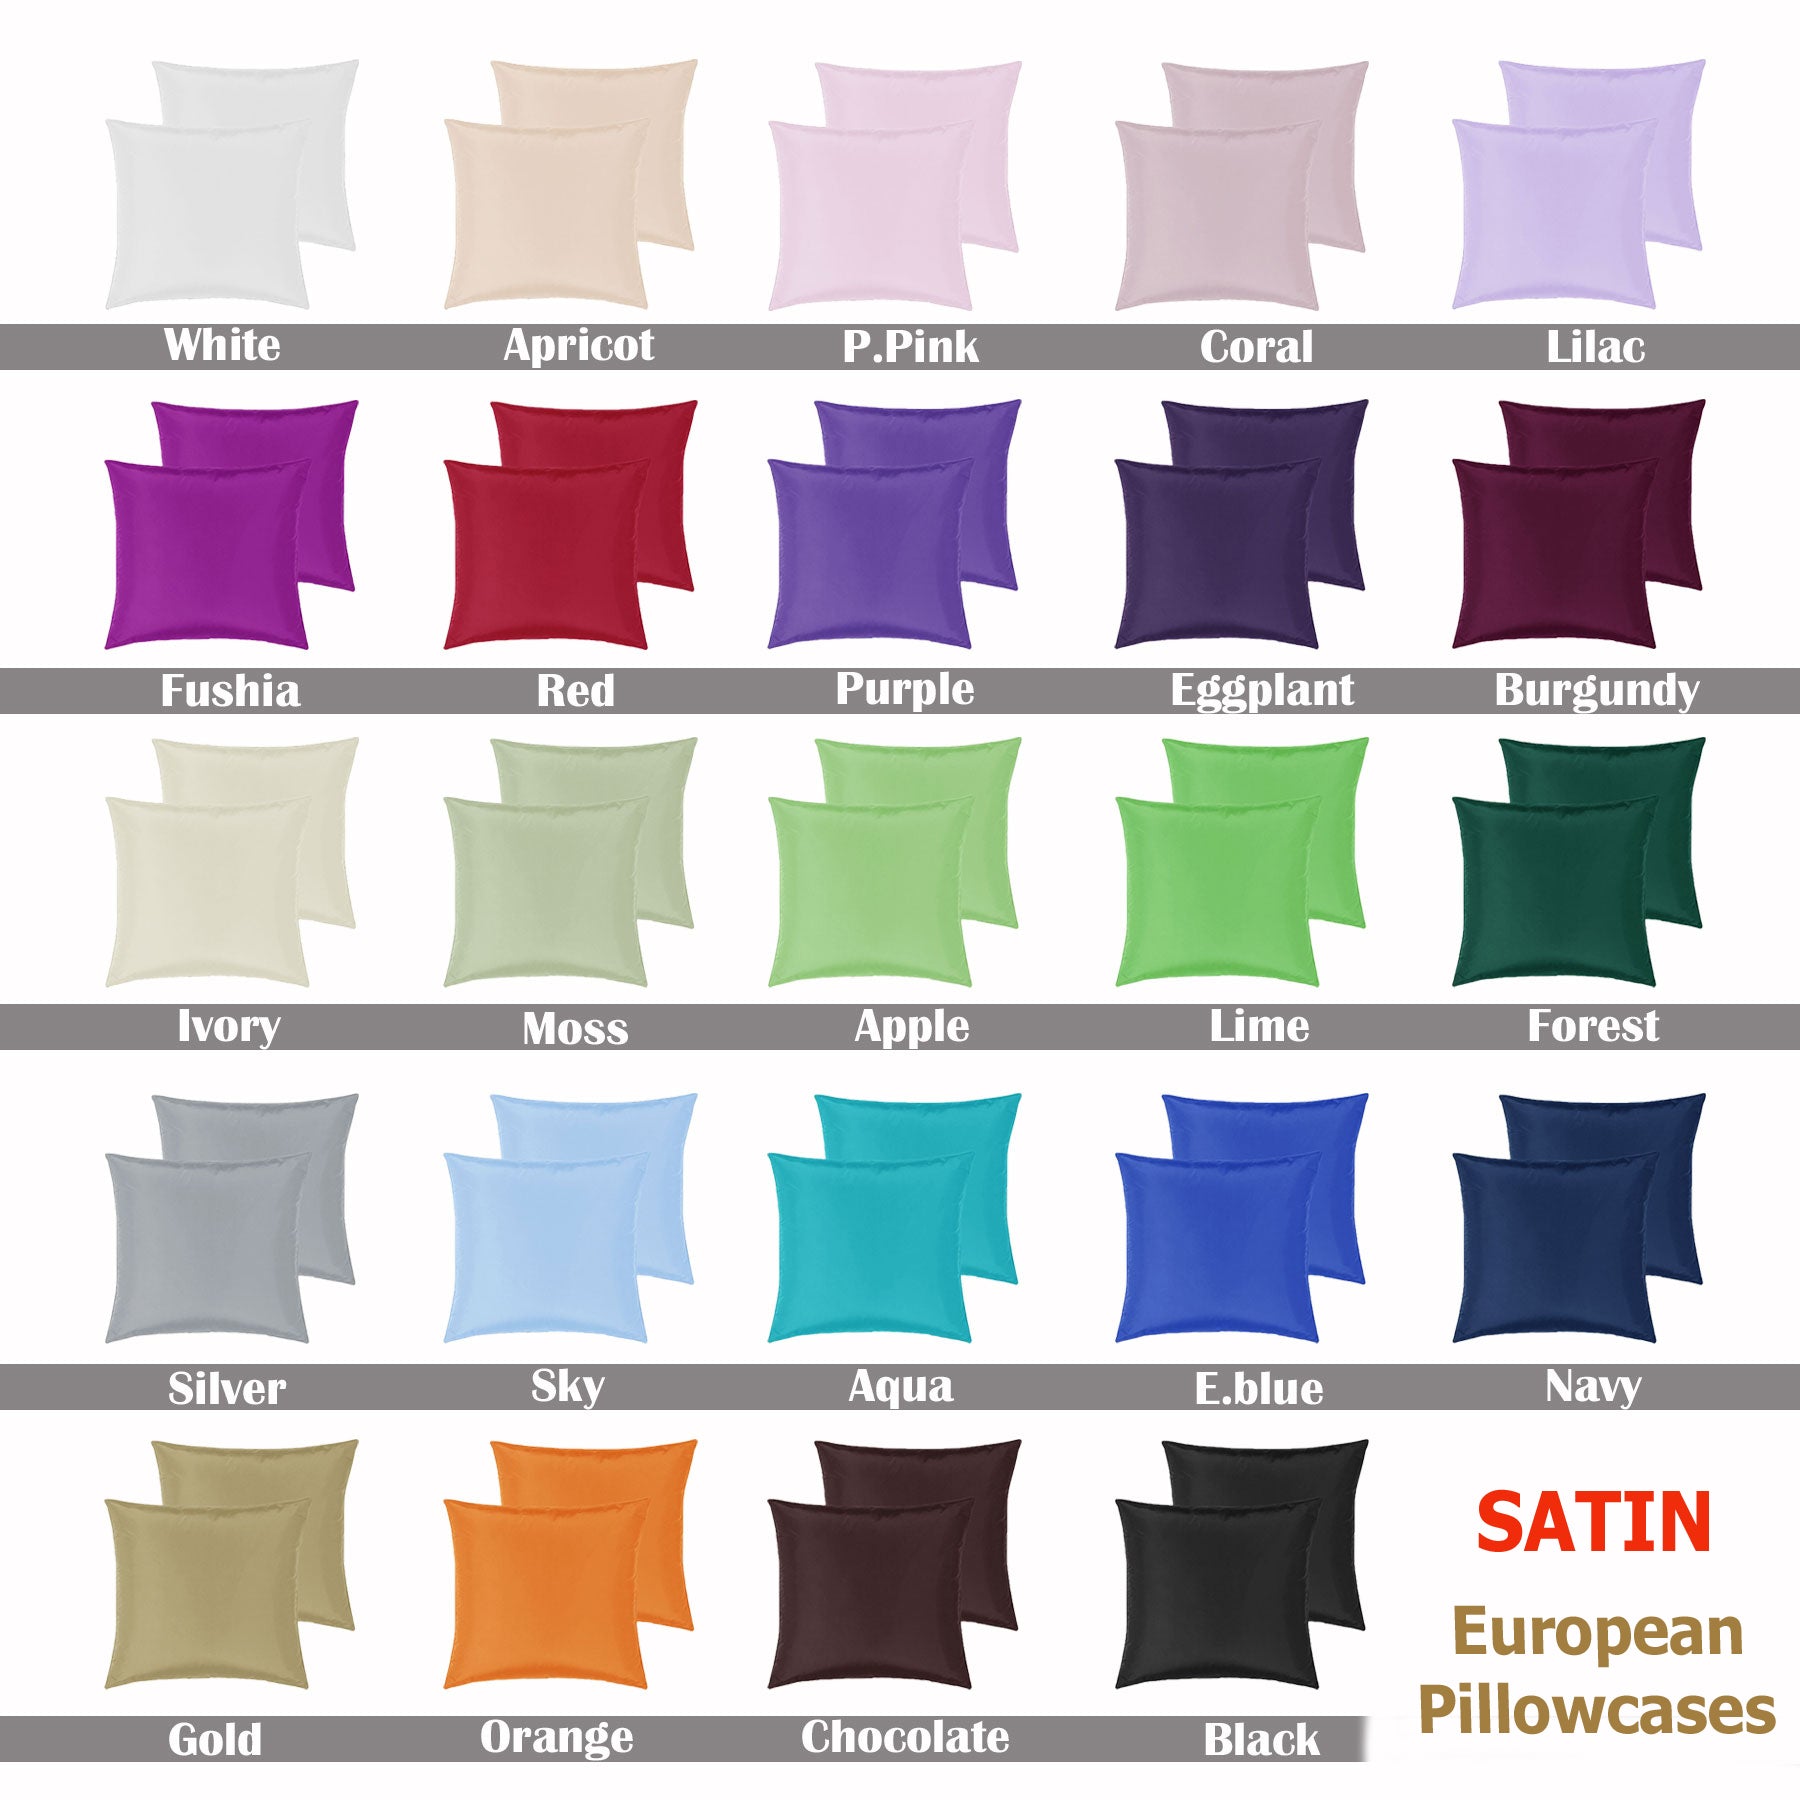 Satin European Pillowcases ( Pair ) CHOCOLATE